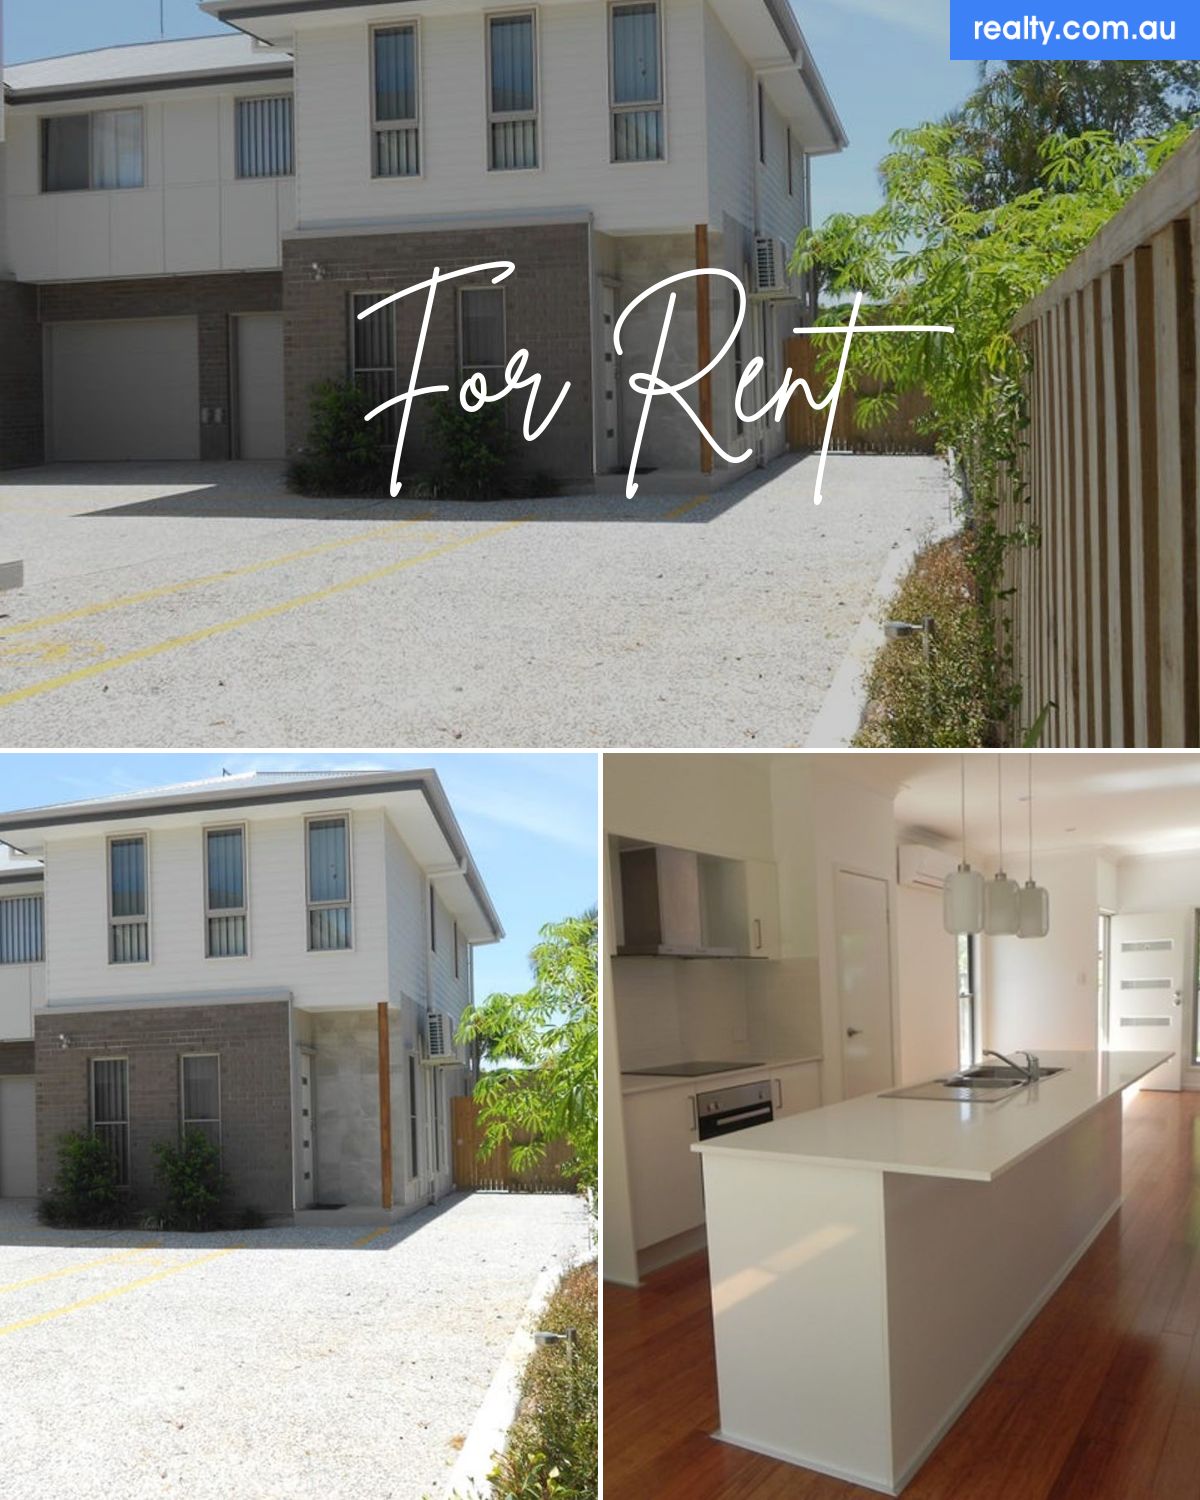 5/6 Fernbourne Road, Wellington Point, QLD 4160 | Realty.com.au